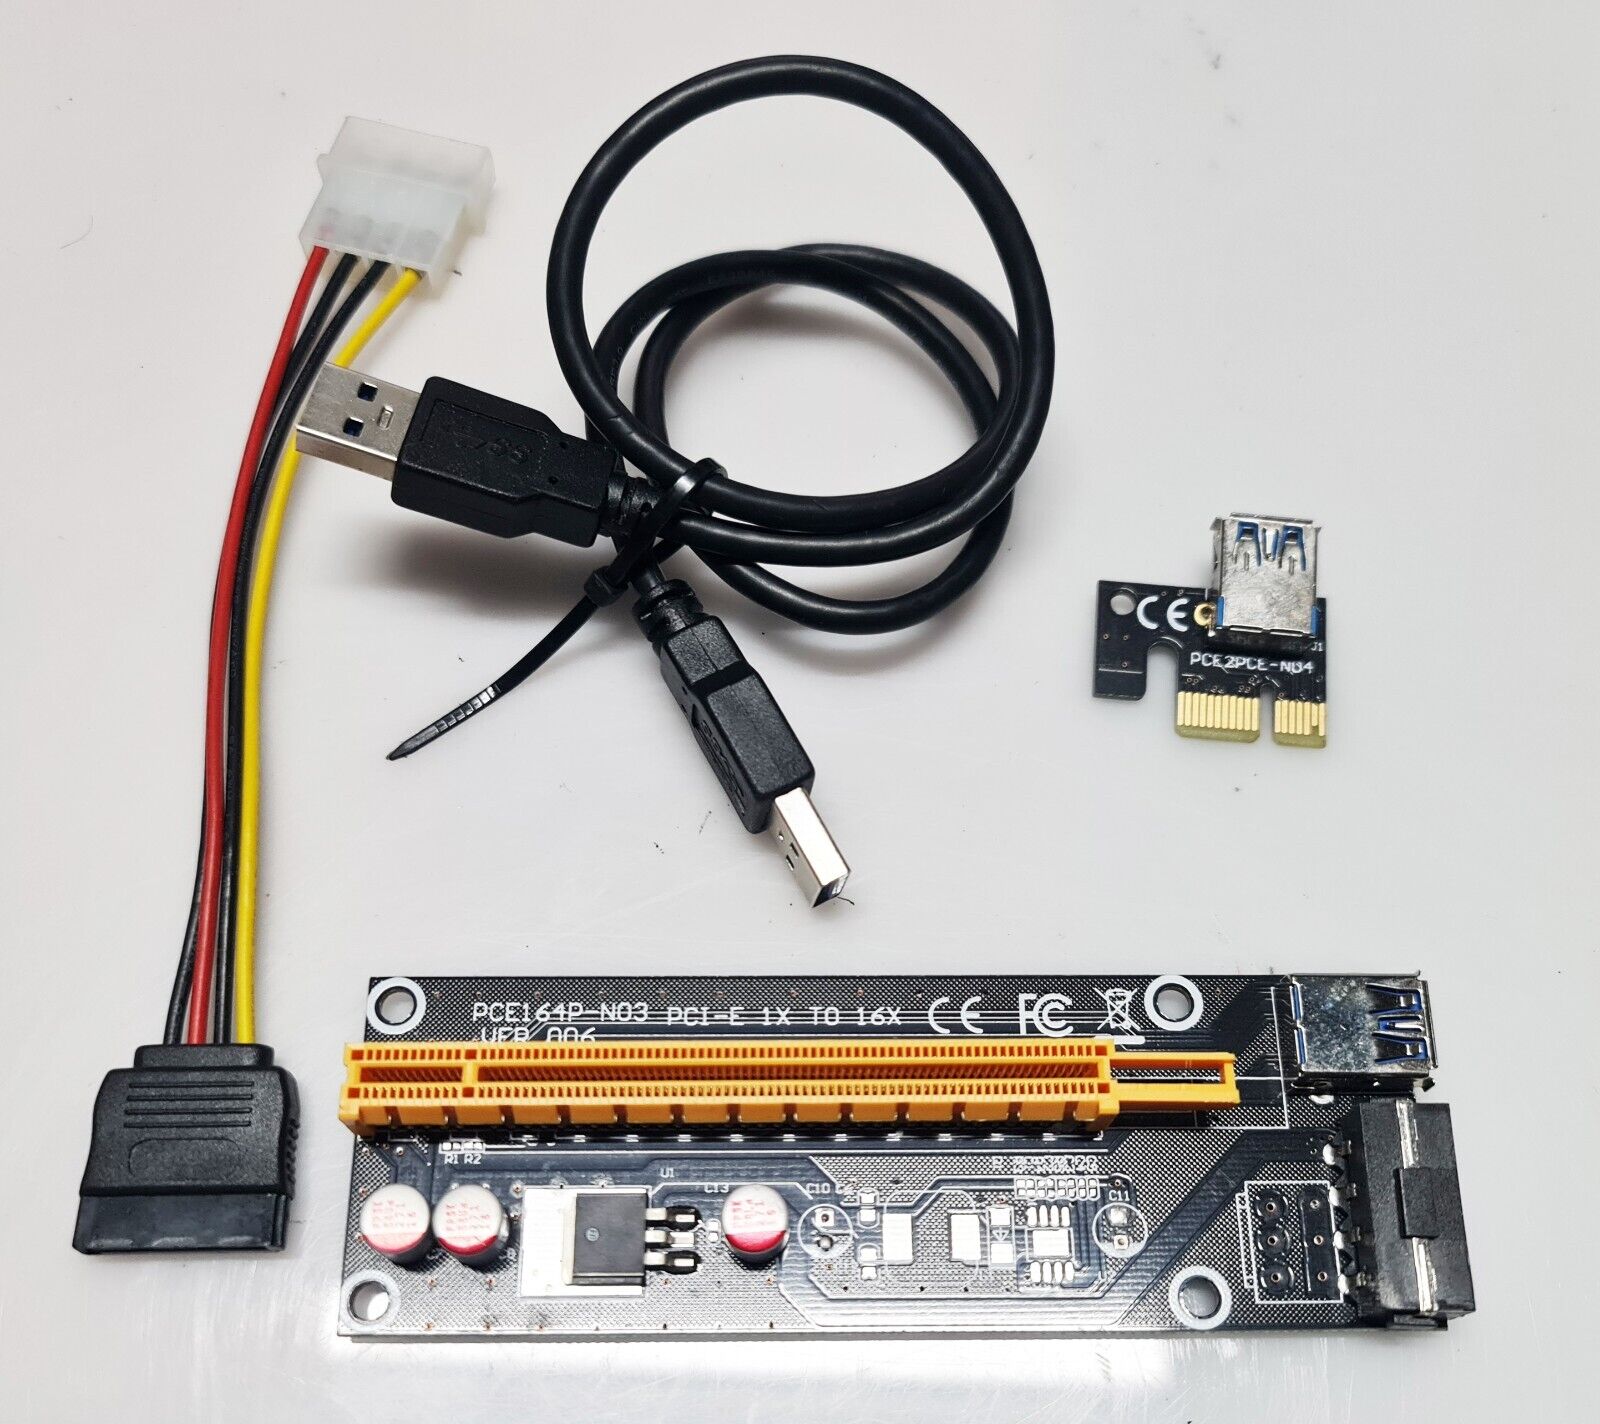 PCI-E Riser Card 1X to 16X Powered  USB 3.0  GPU MODEL: PCE164P-N03 Ver 006